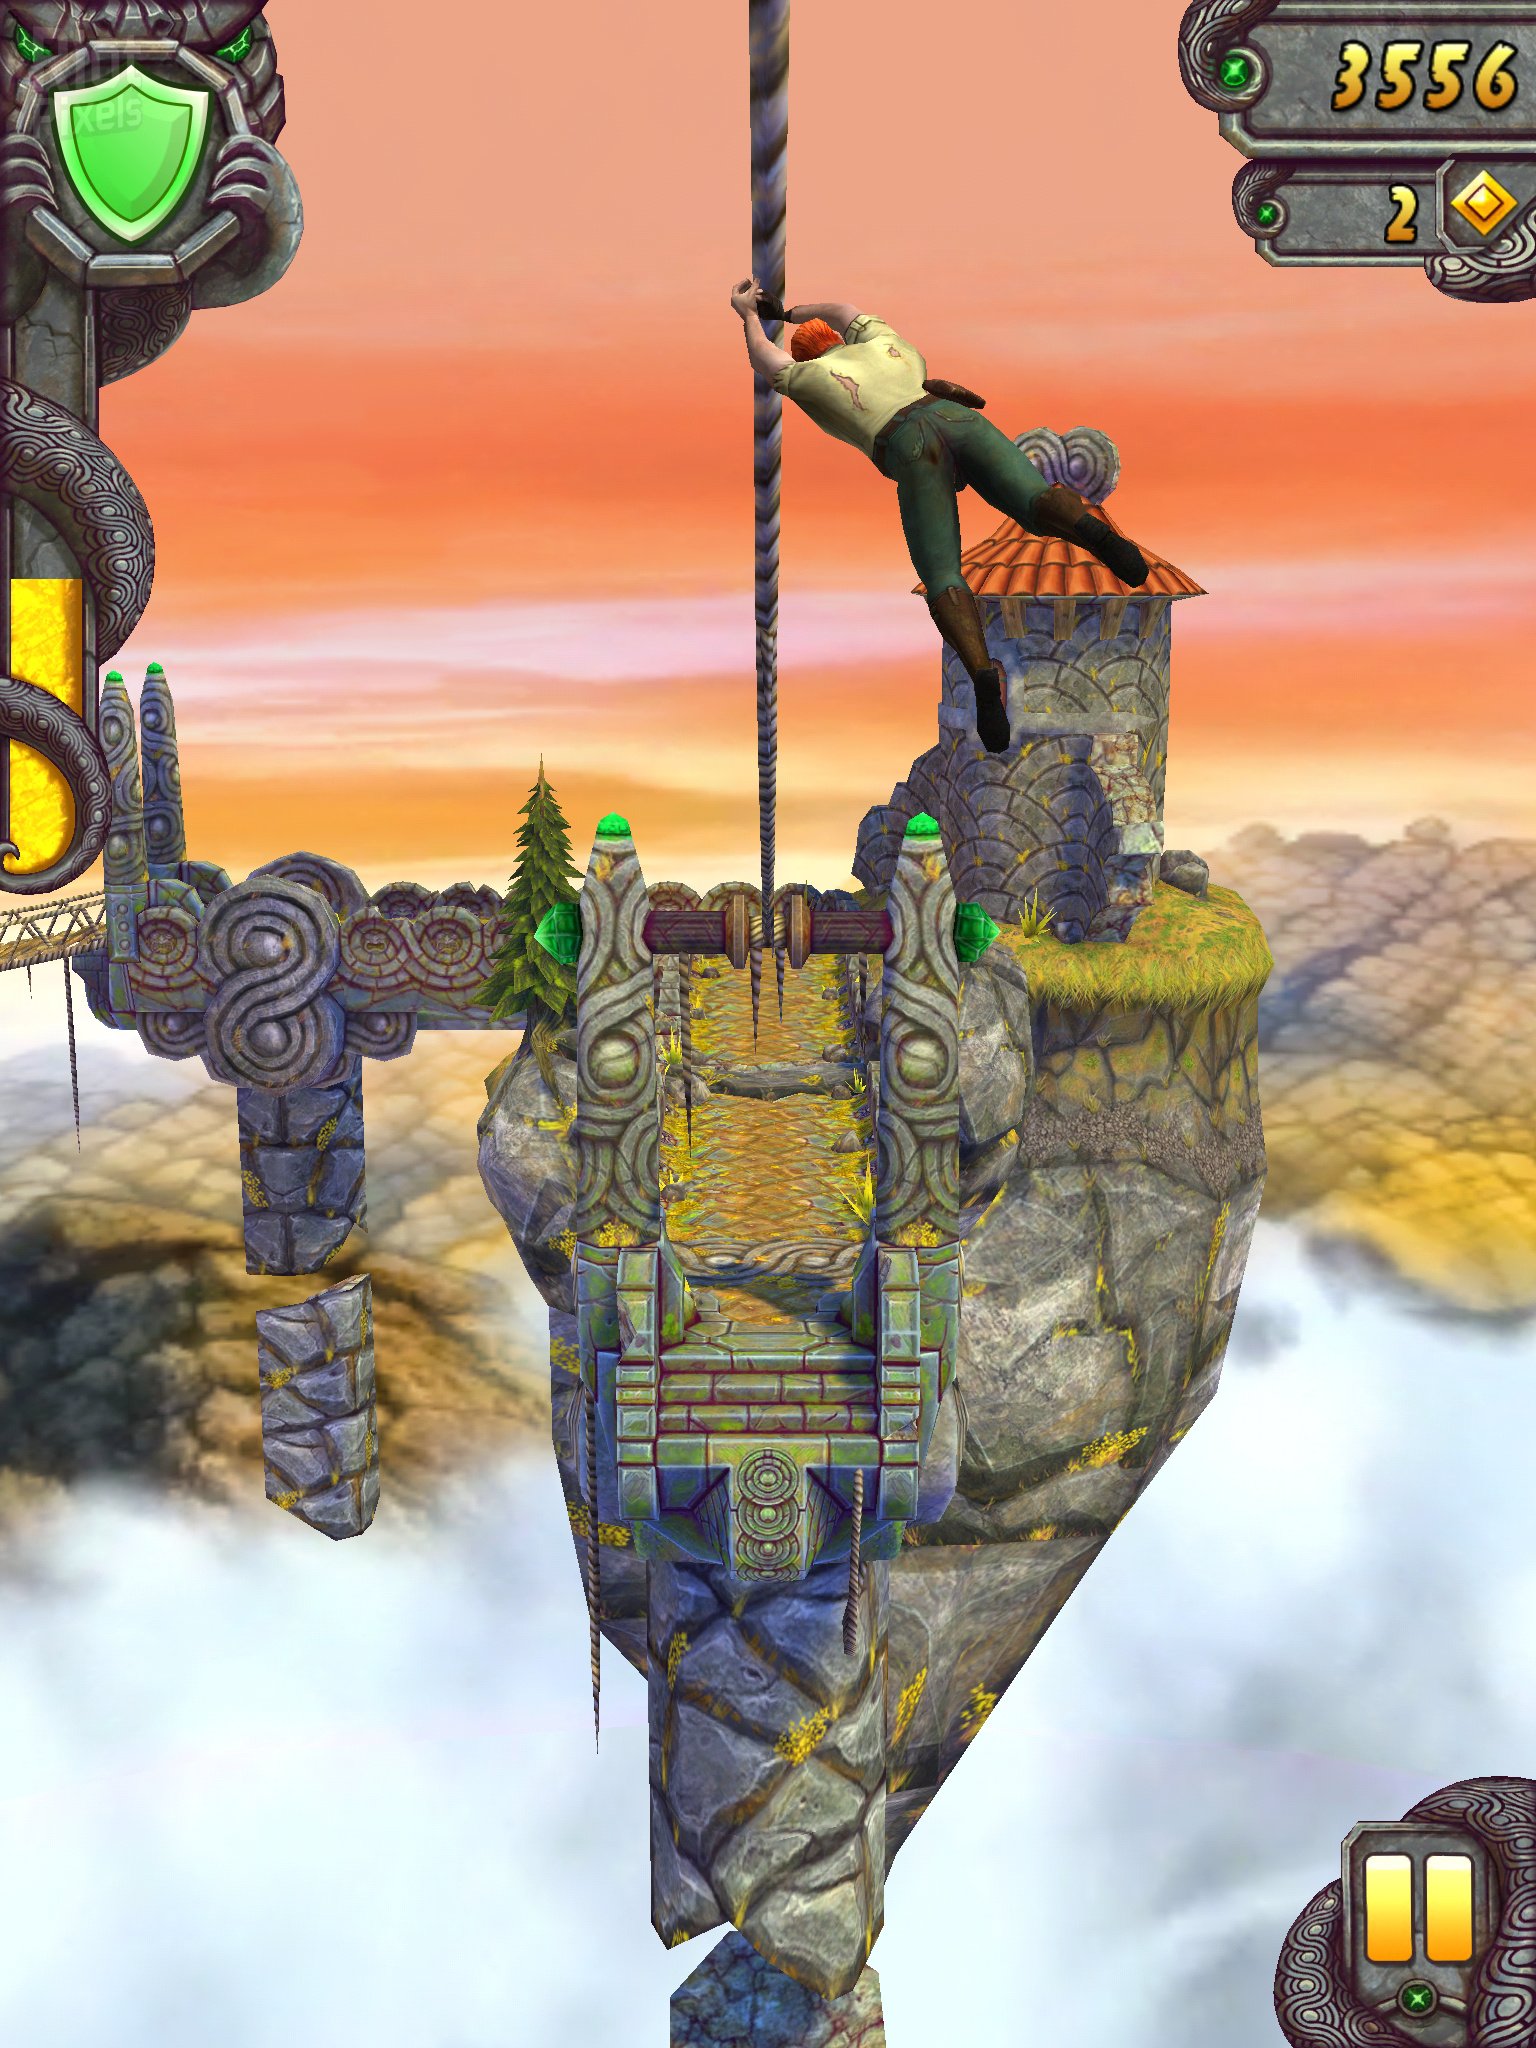 Temple Run: Brave - game screenshots at Riot Pixels, images